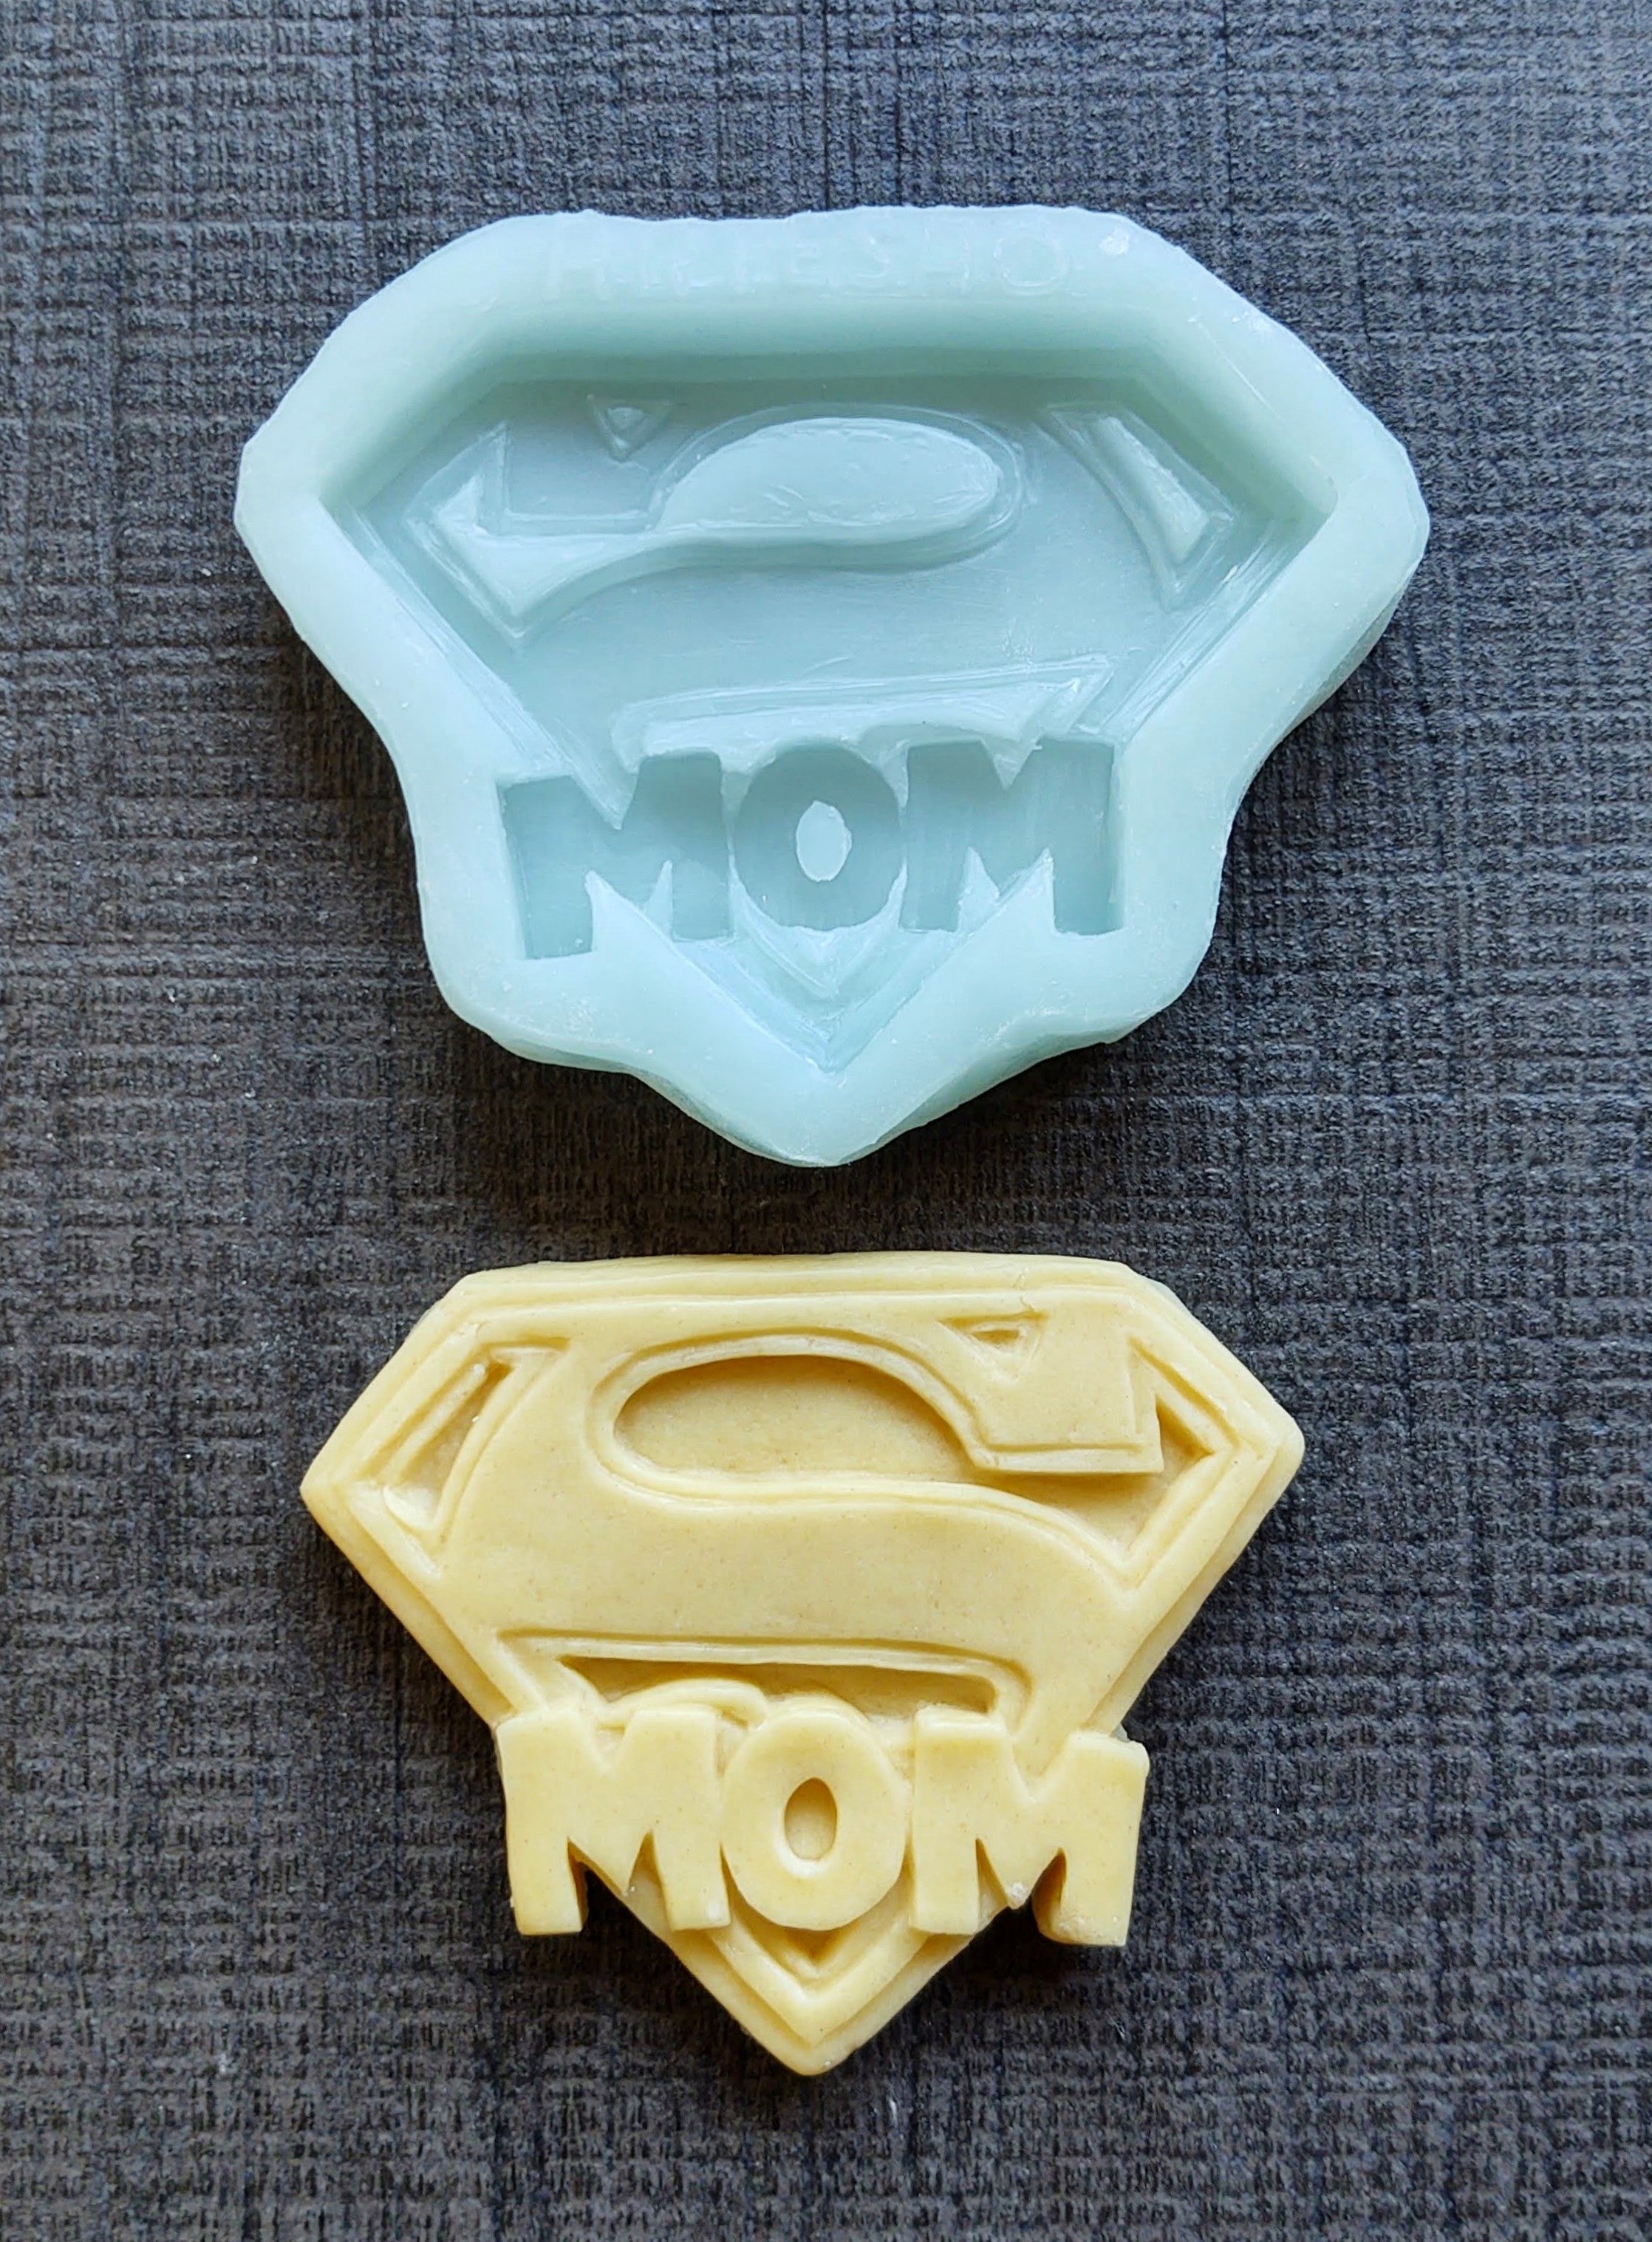 Super Mom Silicone Cookie Mold